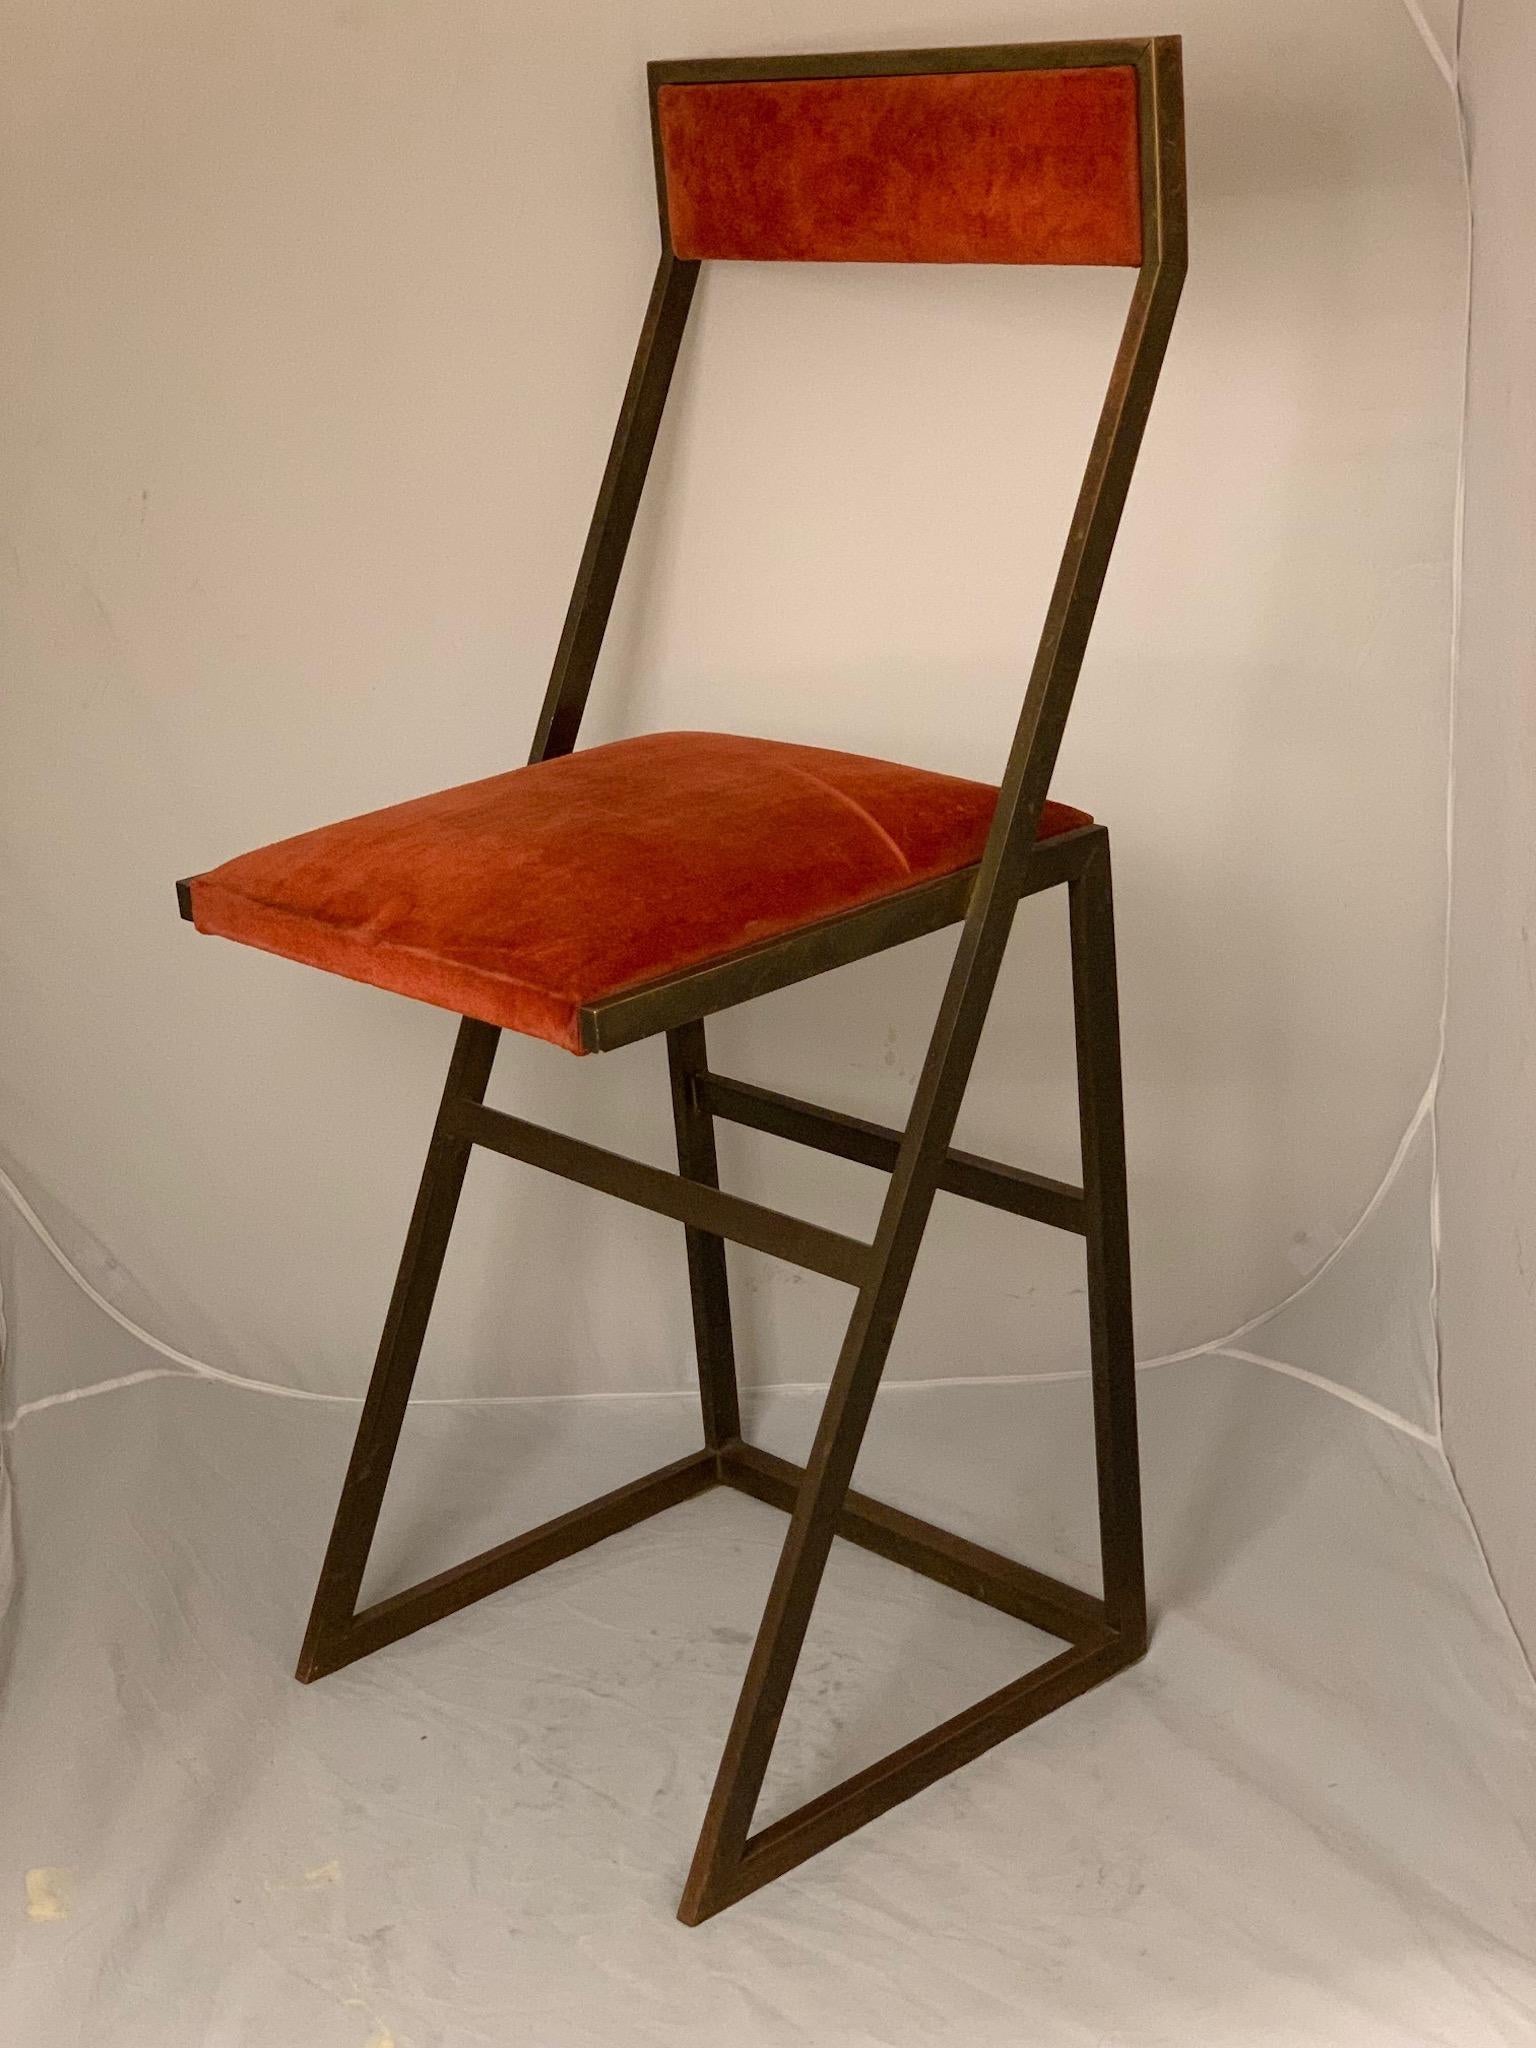 A pair of bar stools in brass and orange velvet in original condition. By Romeo Rega, Italian, 1970s.